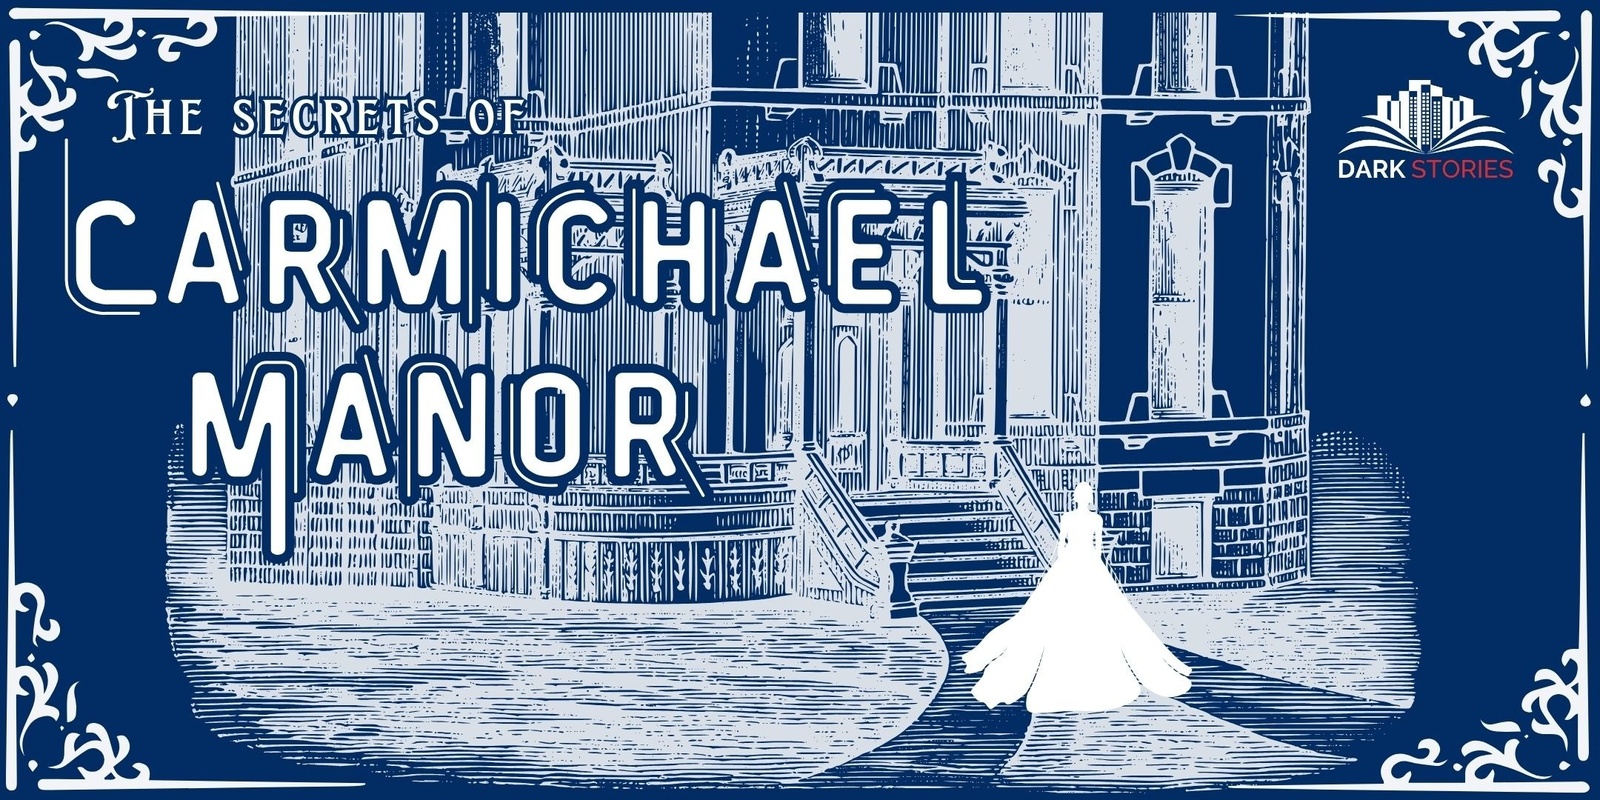 Banner image for The Secrets of Carmichael Manor - Hunter